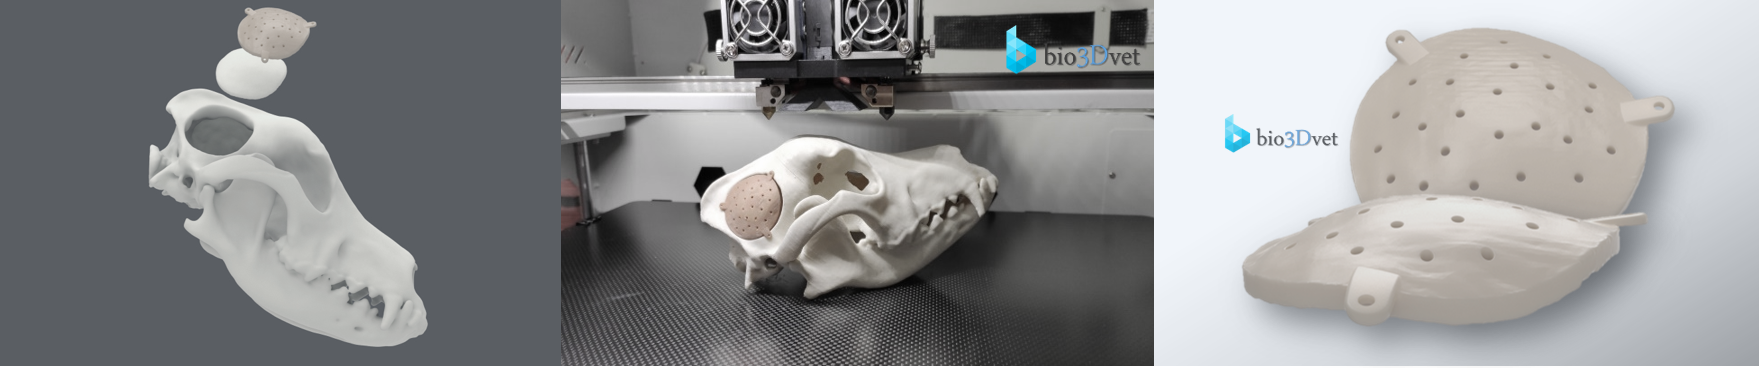 bio3Dvet_Veterinary_Implant PEEK_Anatomical Bone Model_3D Printing_Bioengineering_Advanced Veterinary Services_Κτηνιατρική_Εμφύτευμα PEEK_Ανατομικό Μοντέλο Οστού_Τρισδιάστατη Εκτύπωση_Εμβιομηχανική_Προηγμένες Κτηνιατρικές Υπηρεσίες_I3